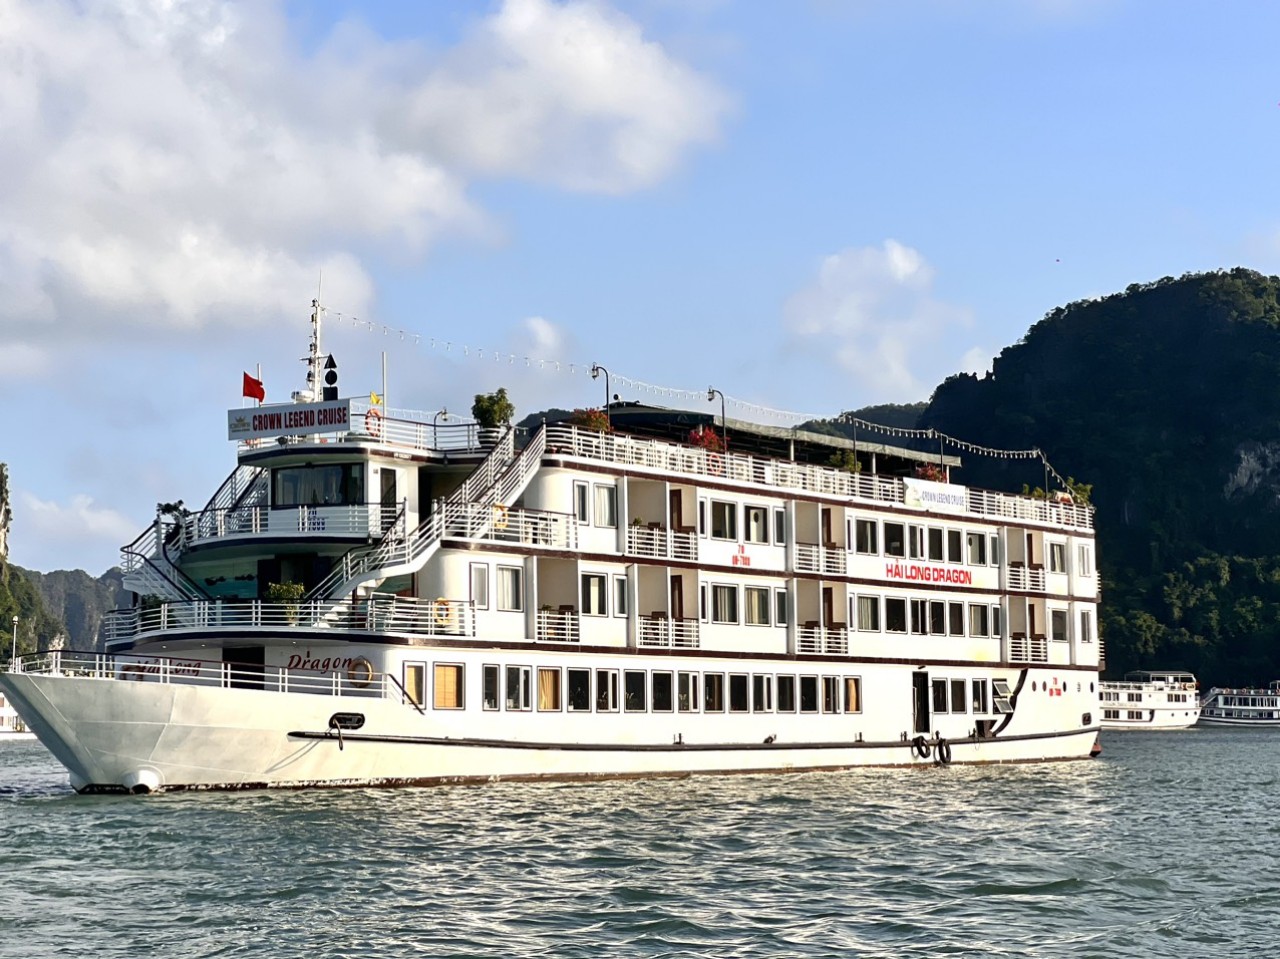 Halong bay on Crownlegend cruise (3 days/ 2 nights)